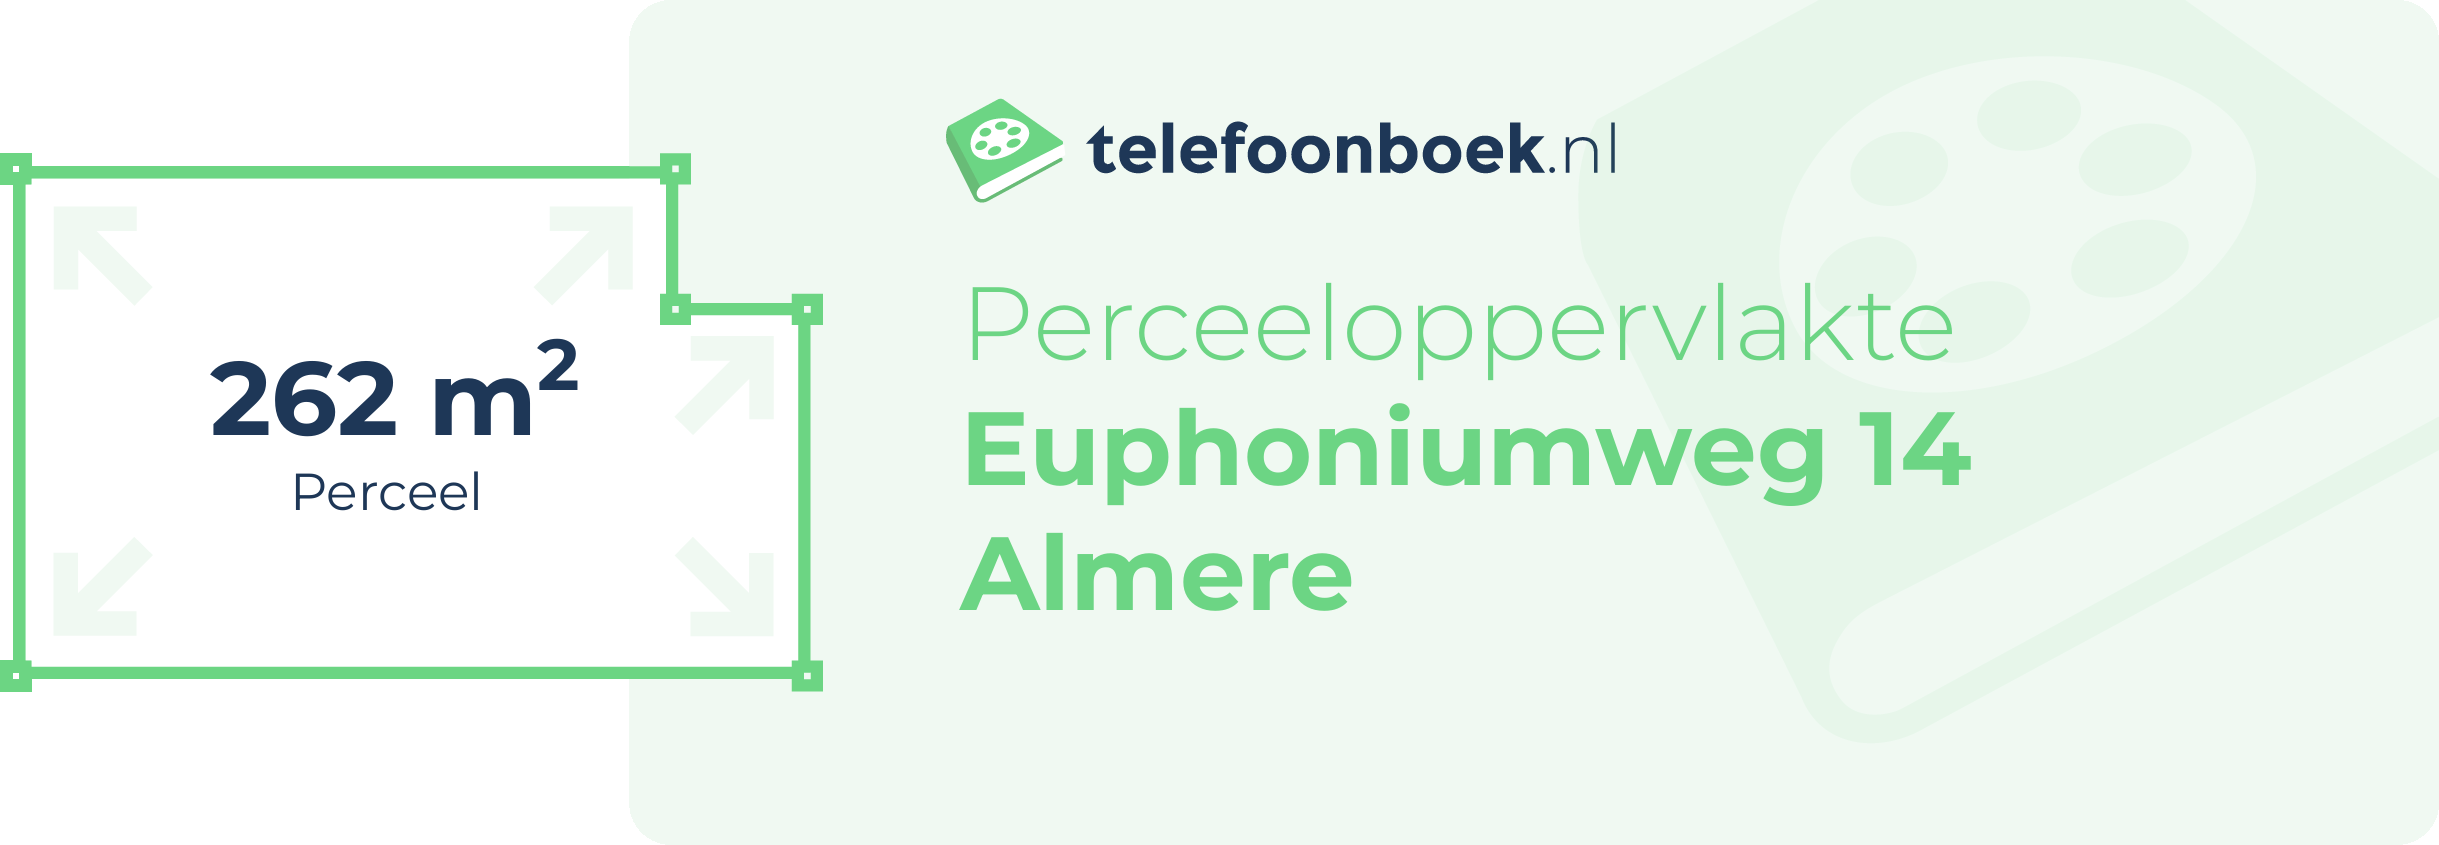 Perceeloppervlakte Euphoniumweg 14 Almere